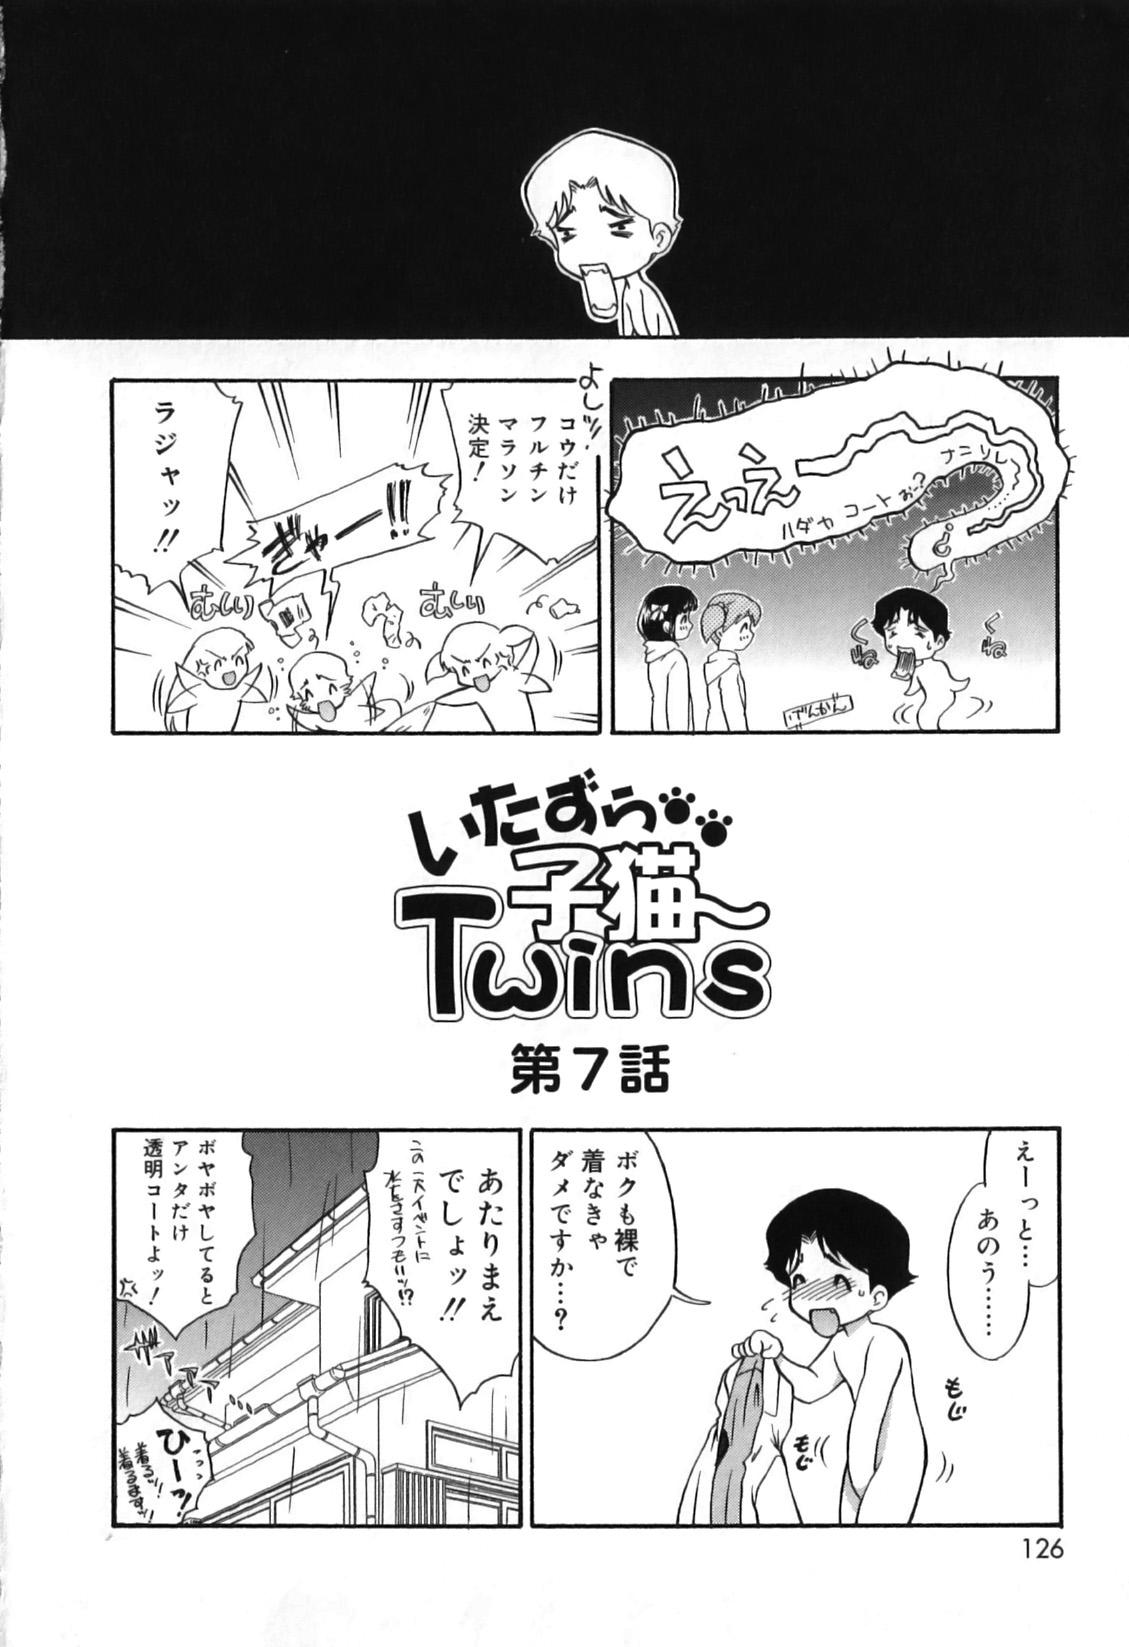 Itazura Koneko Twins 129